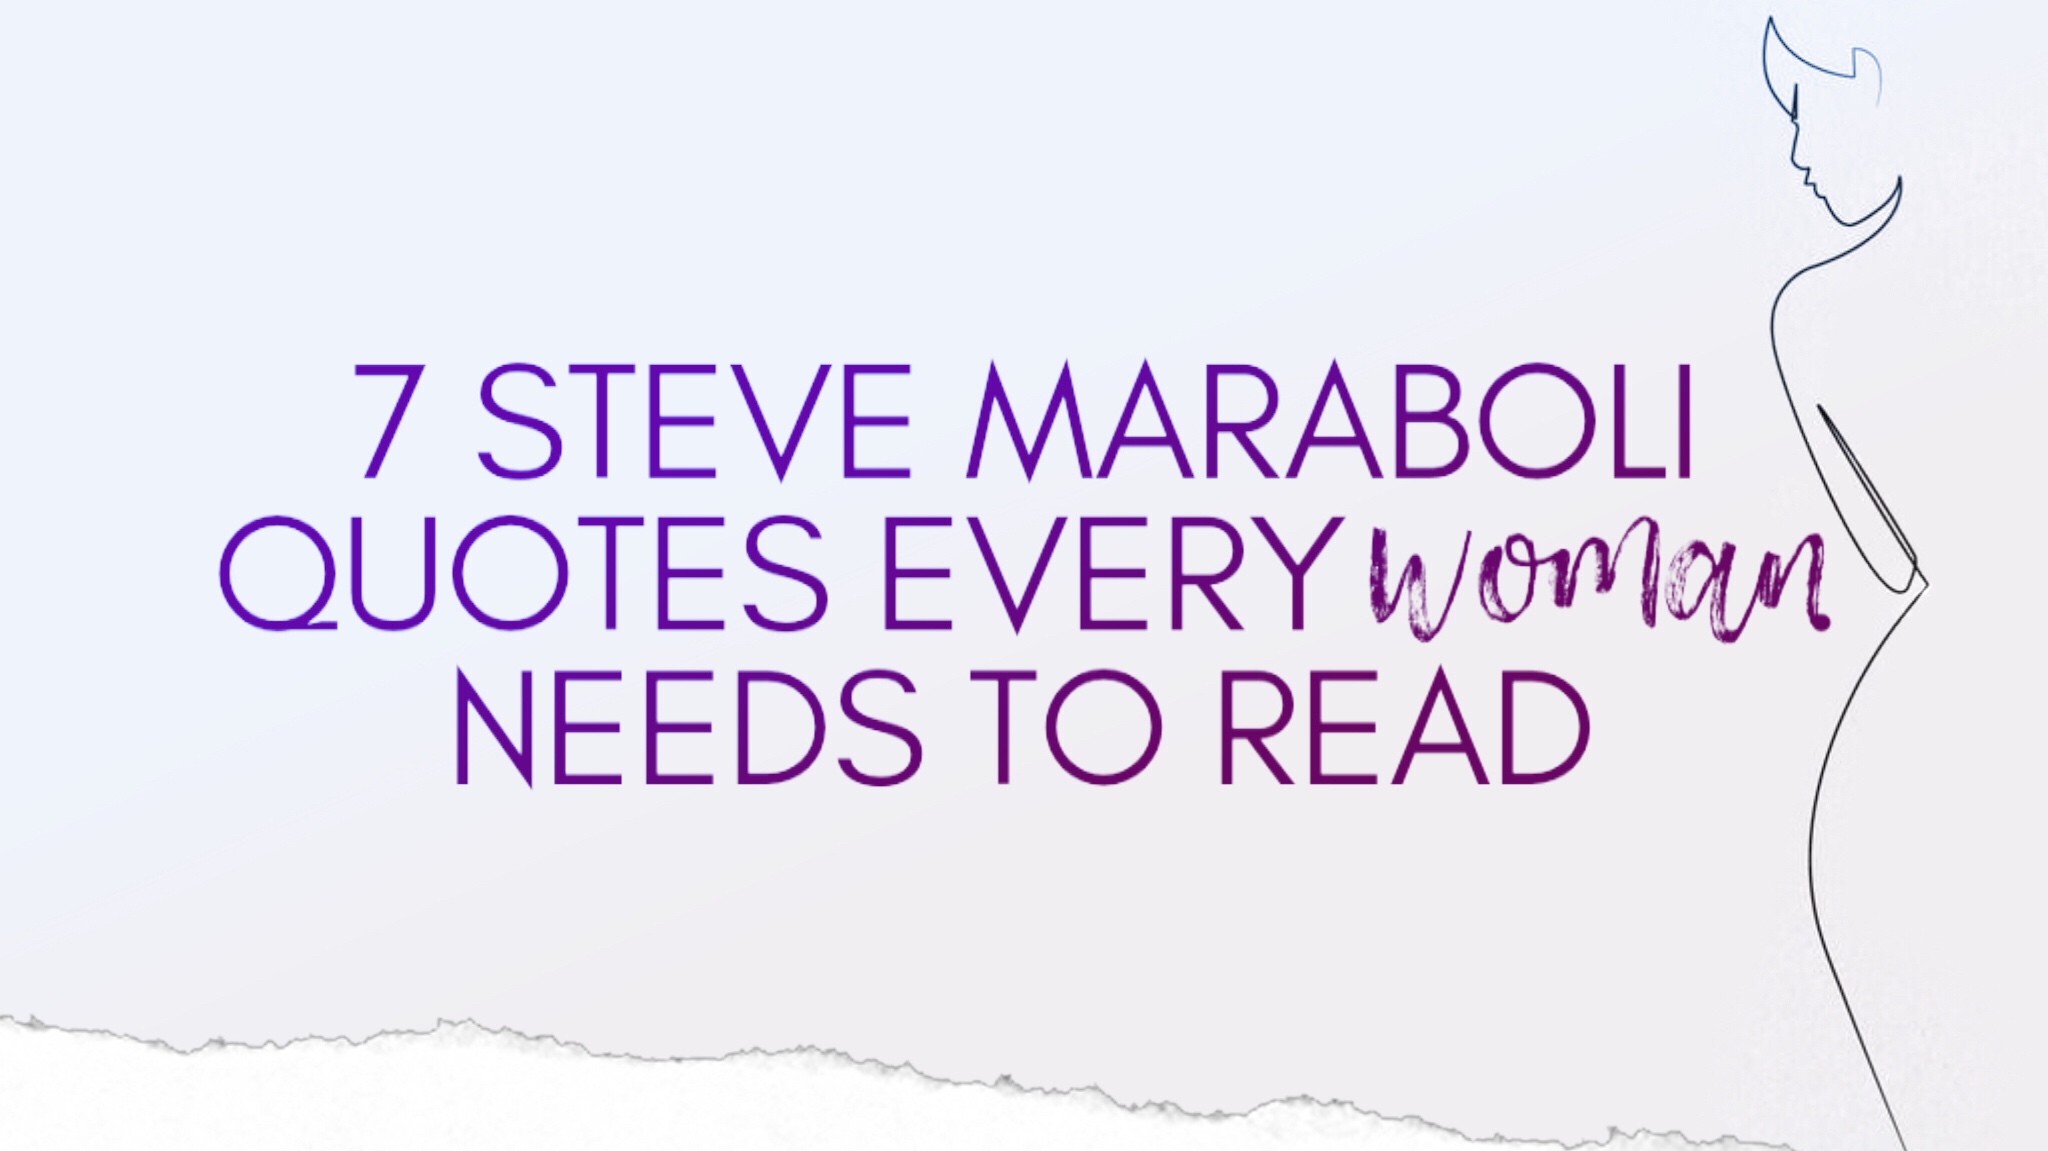 7 Steve Maraboli Quotes Every Woman Needs to Read